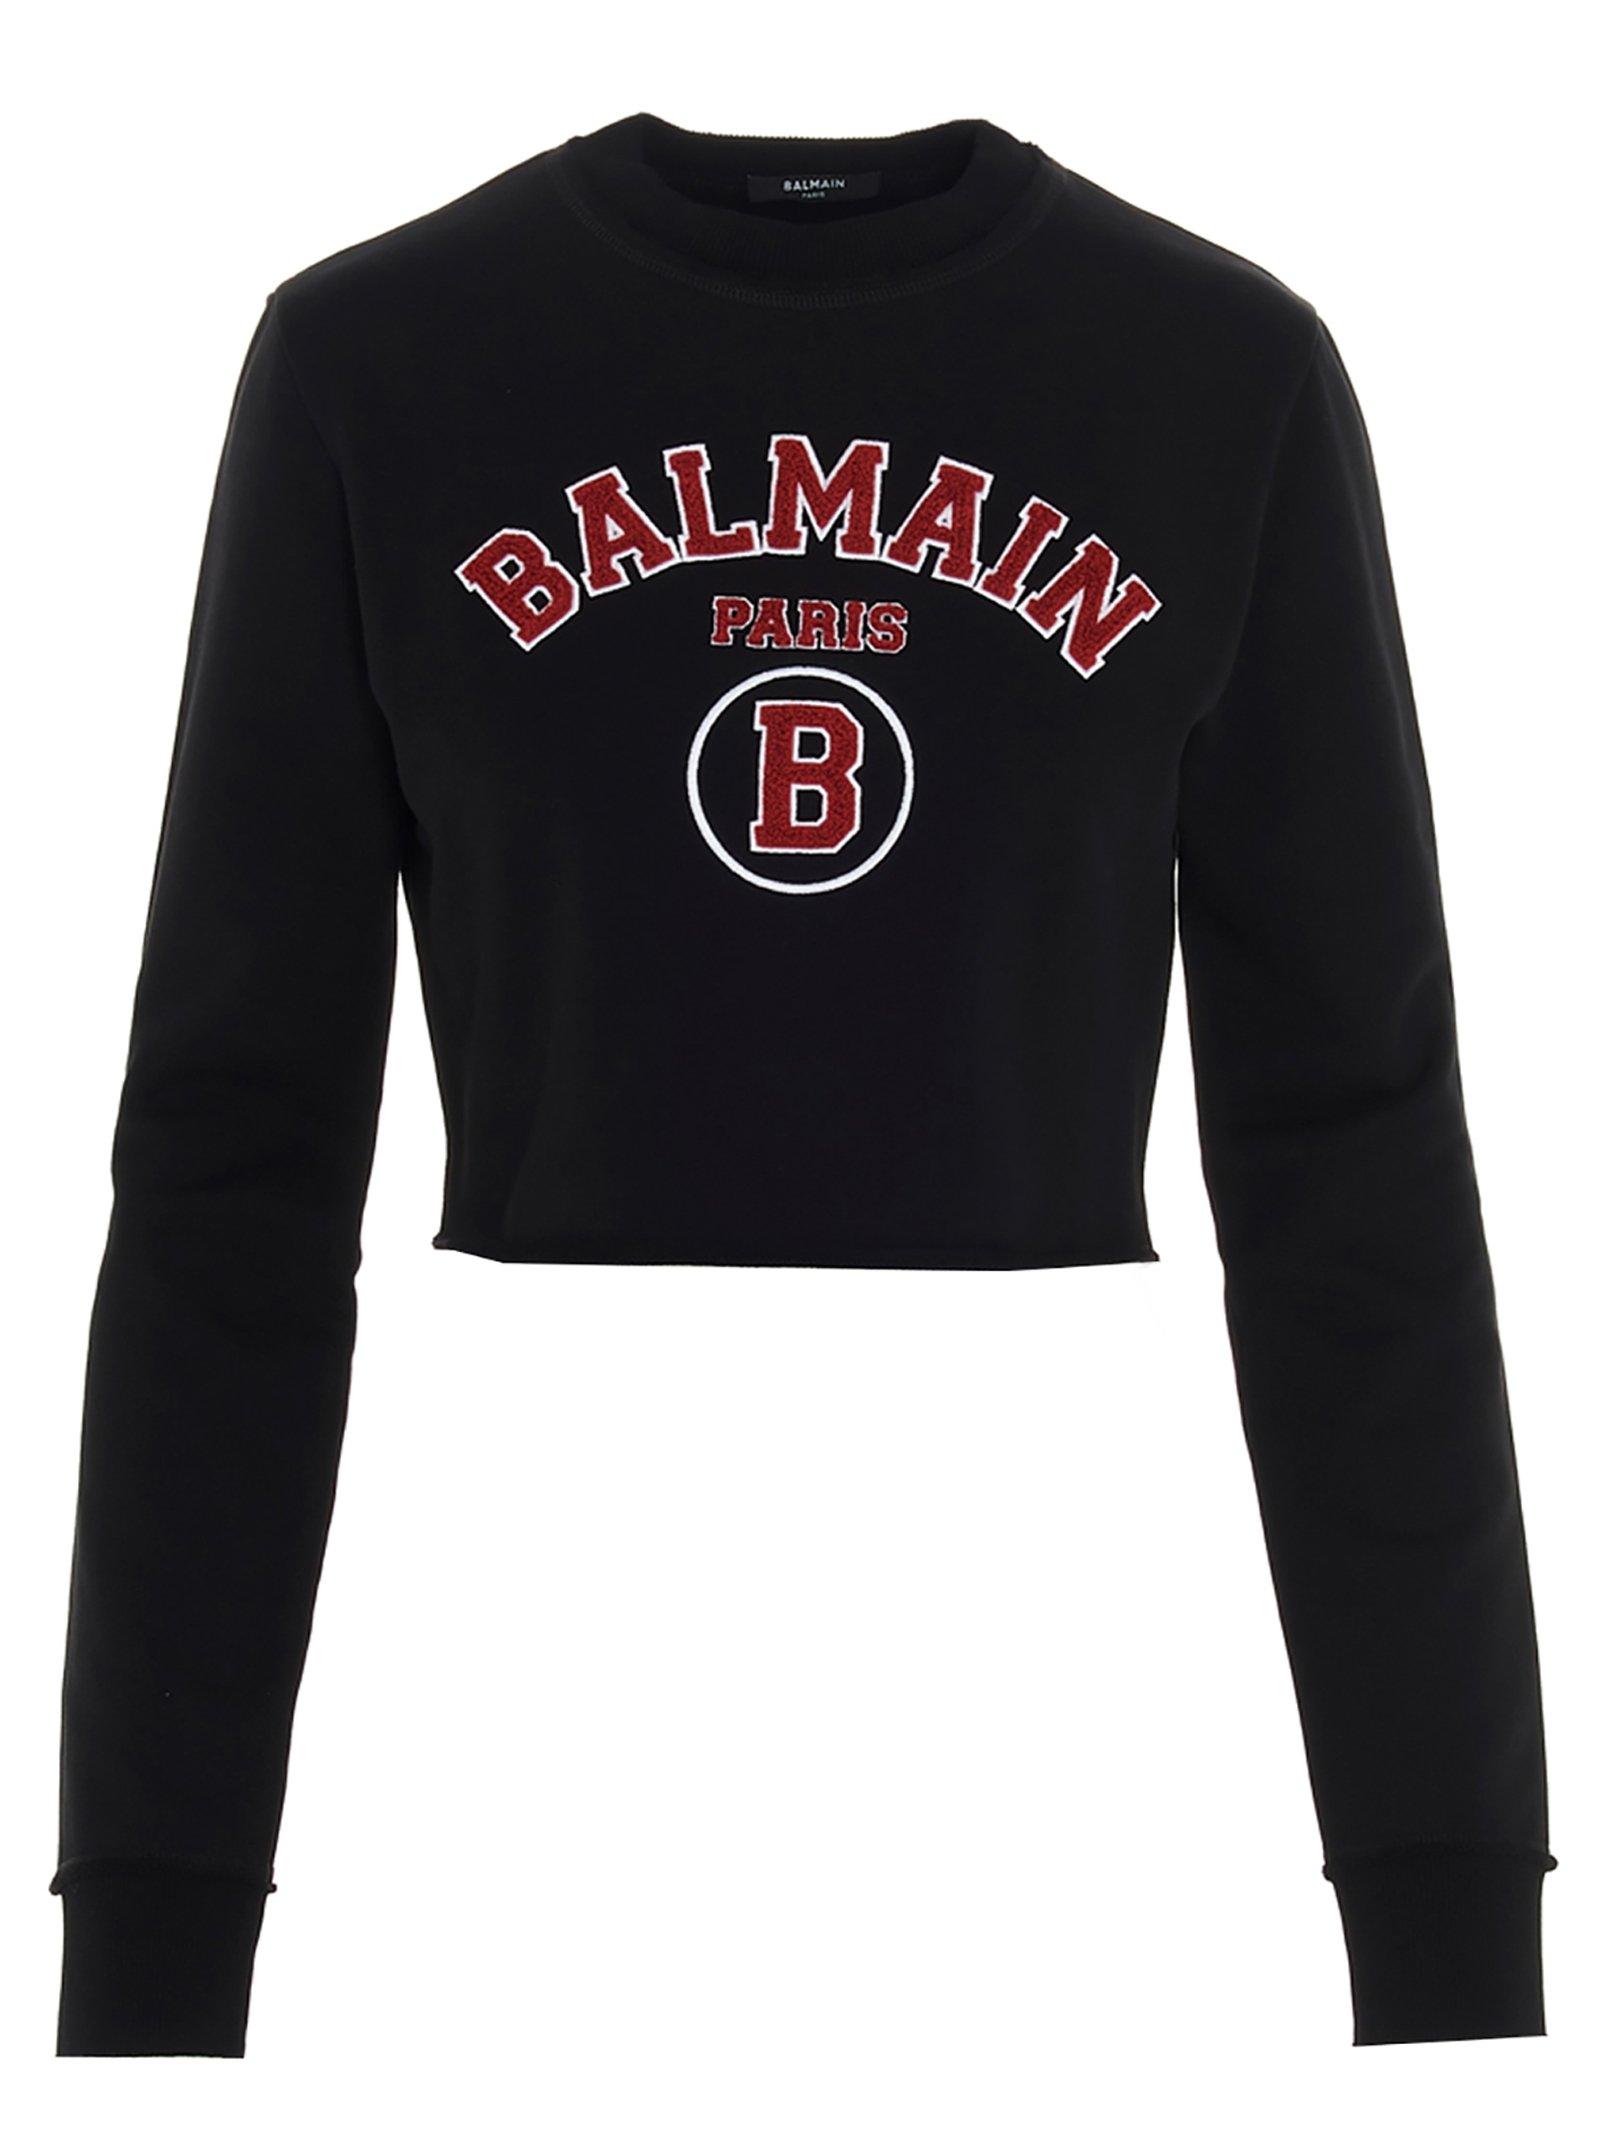 Balmain Cotton College Sweatshirt in Black - Lyst